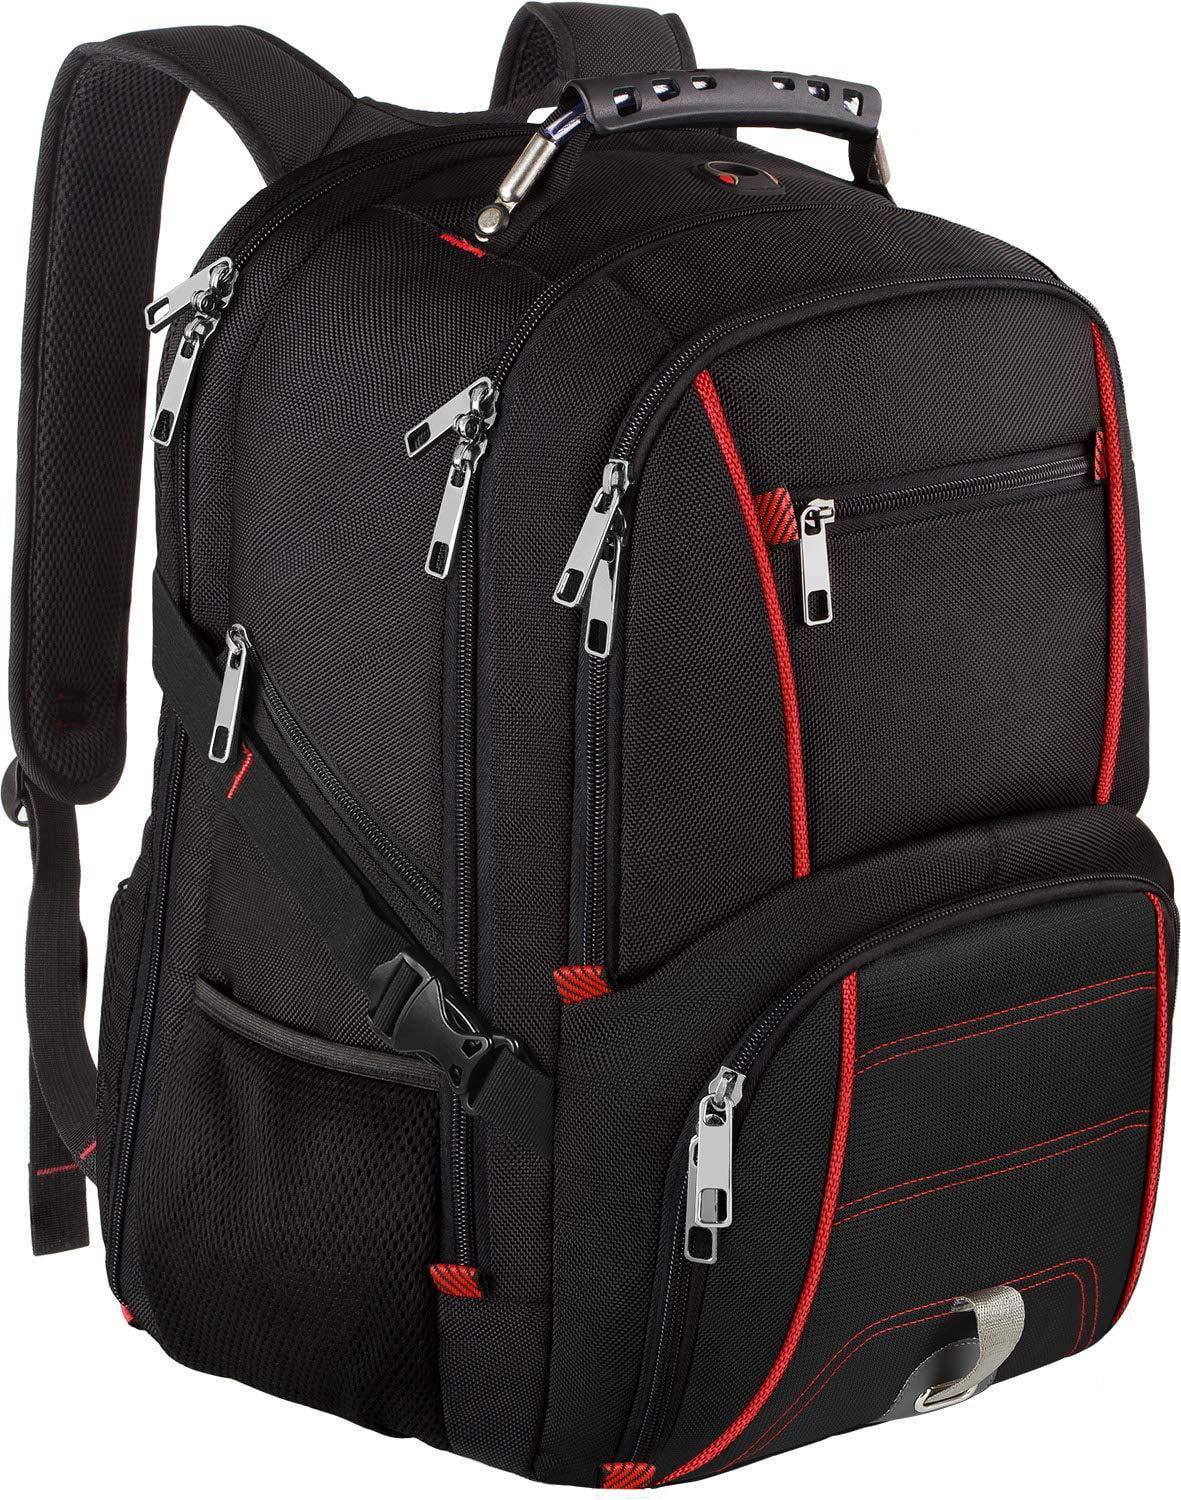 Shakira Backpacks Travel Laptop Backpack Gifts for Women Men Business Computer Bag College High School Bookbags Fit 15 Inch Laptops 